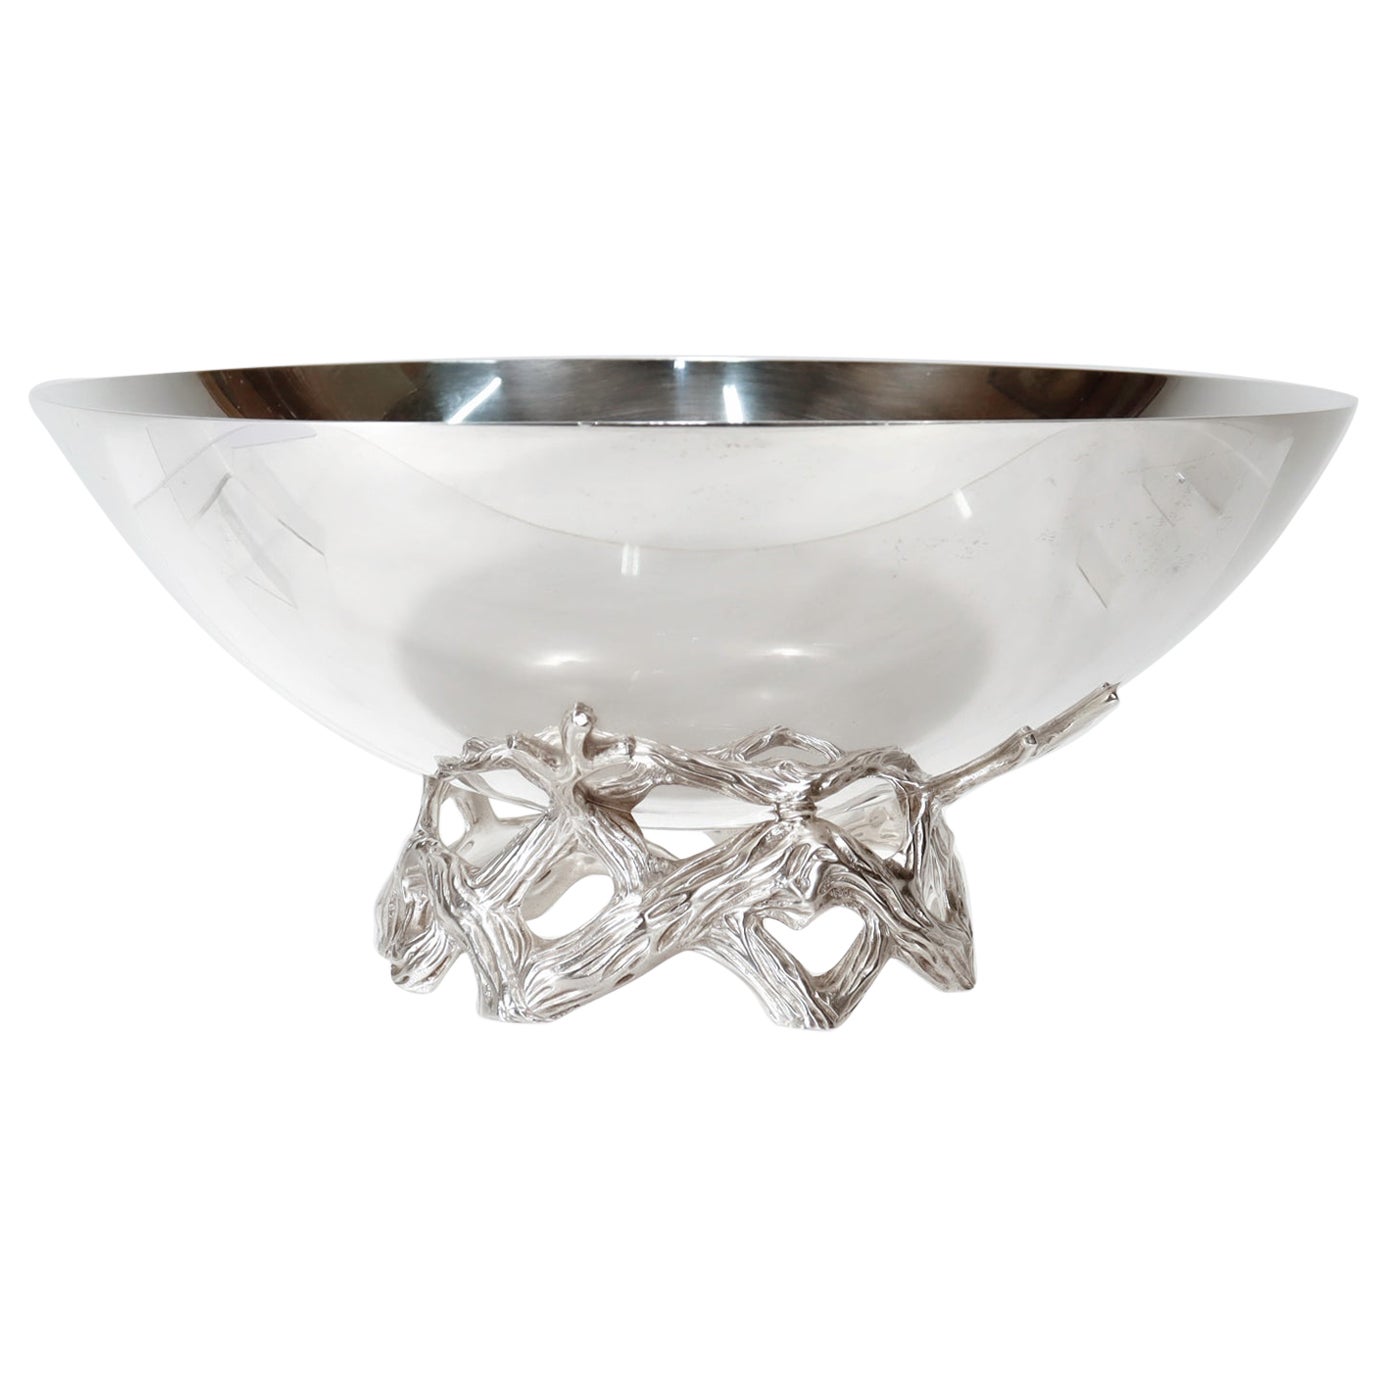 Postmodern Tiffany & Co. Sterling Silver Centerpiece Bowl Model No 23886